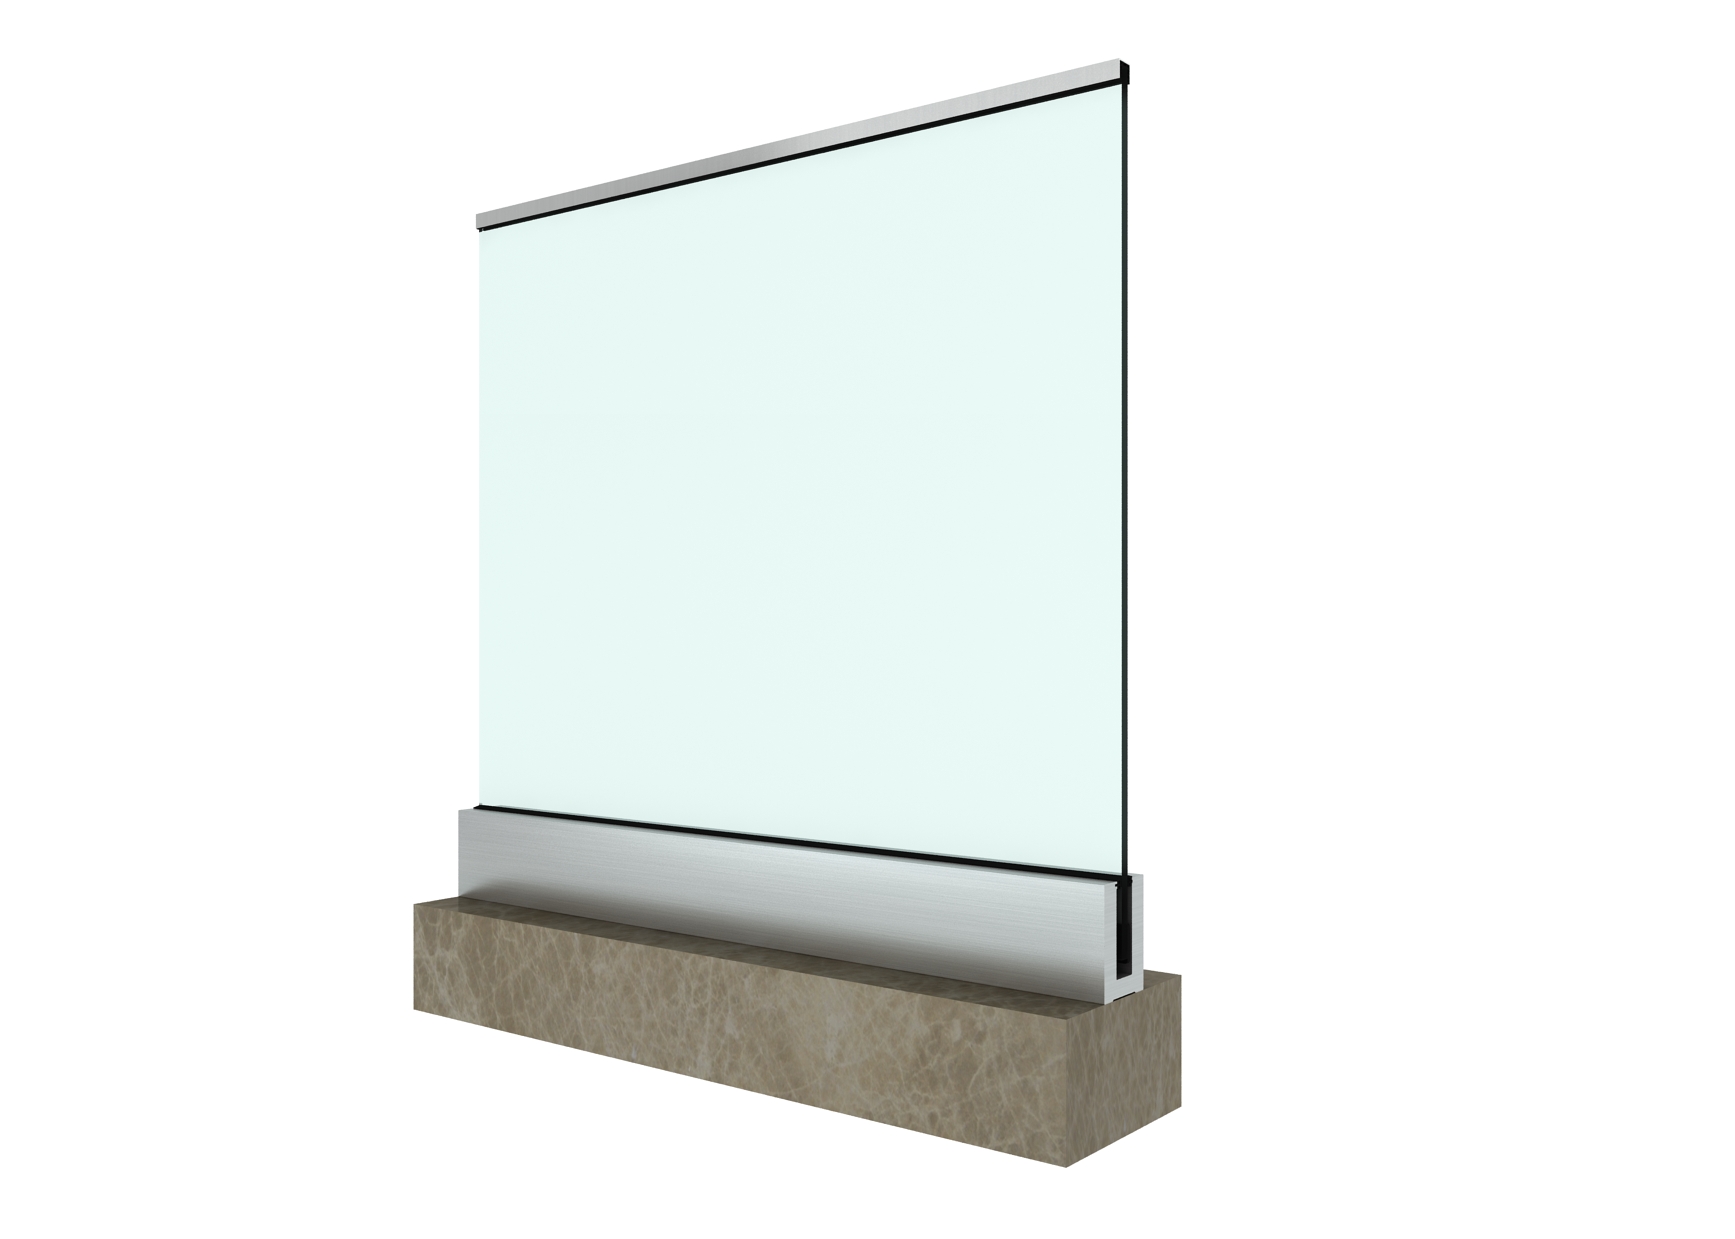 6+1.14+6 mm laminated glass balustrade deck railings